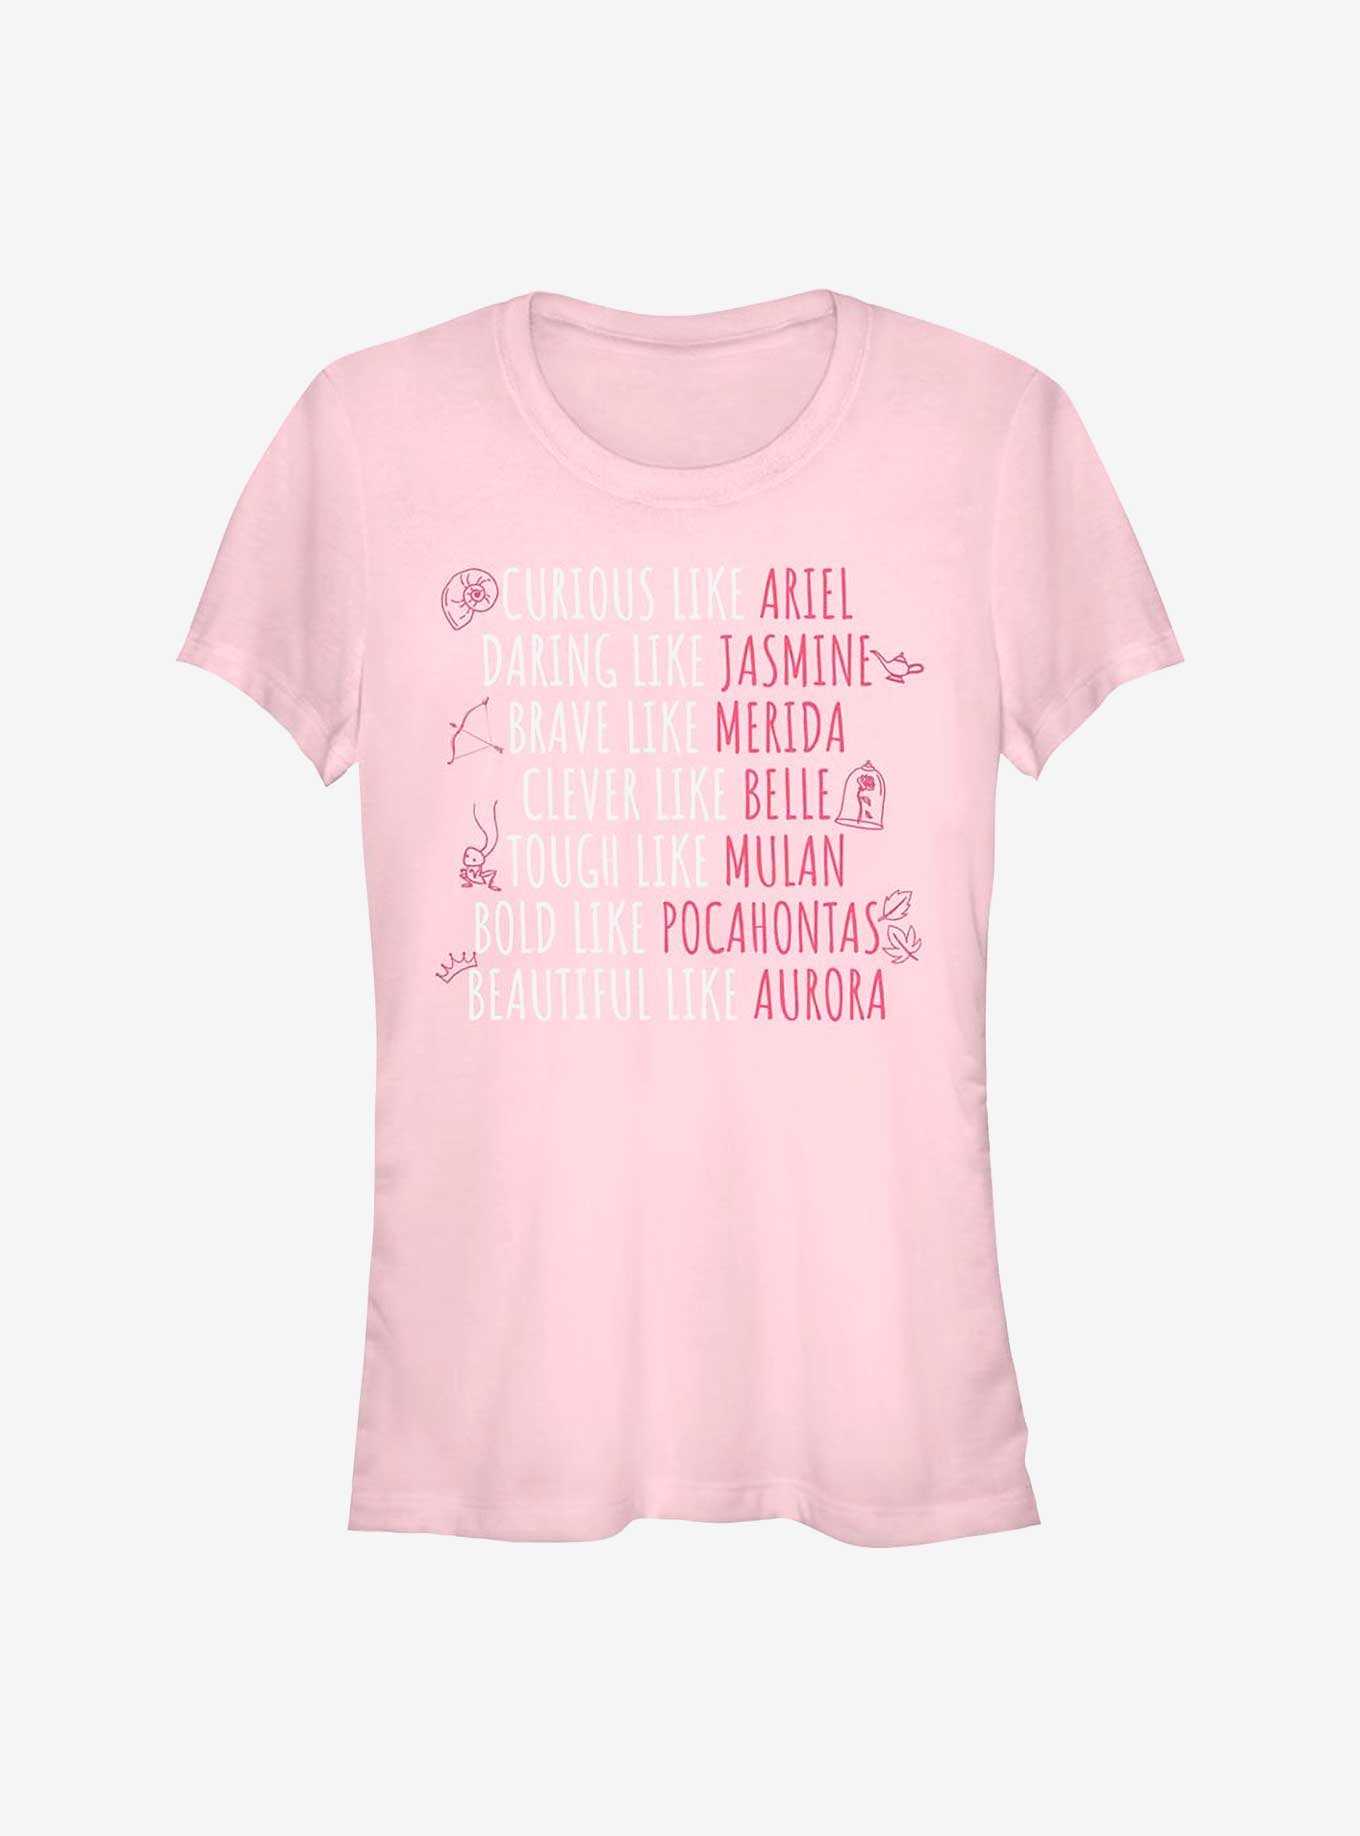 Disney Princess Character Traits Girls T-Shirt, , hi-res